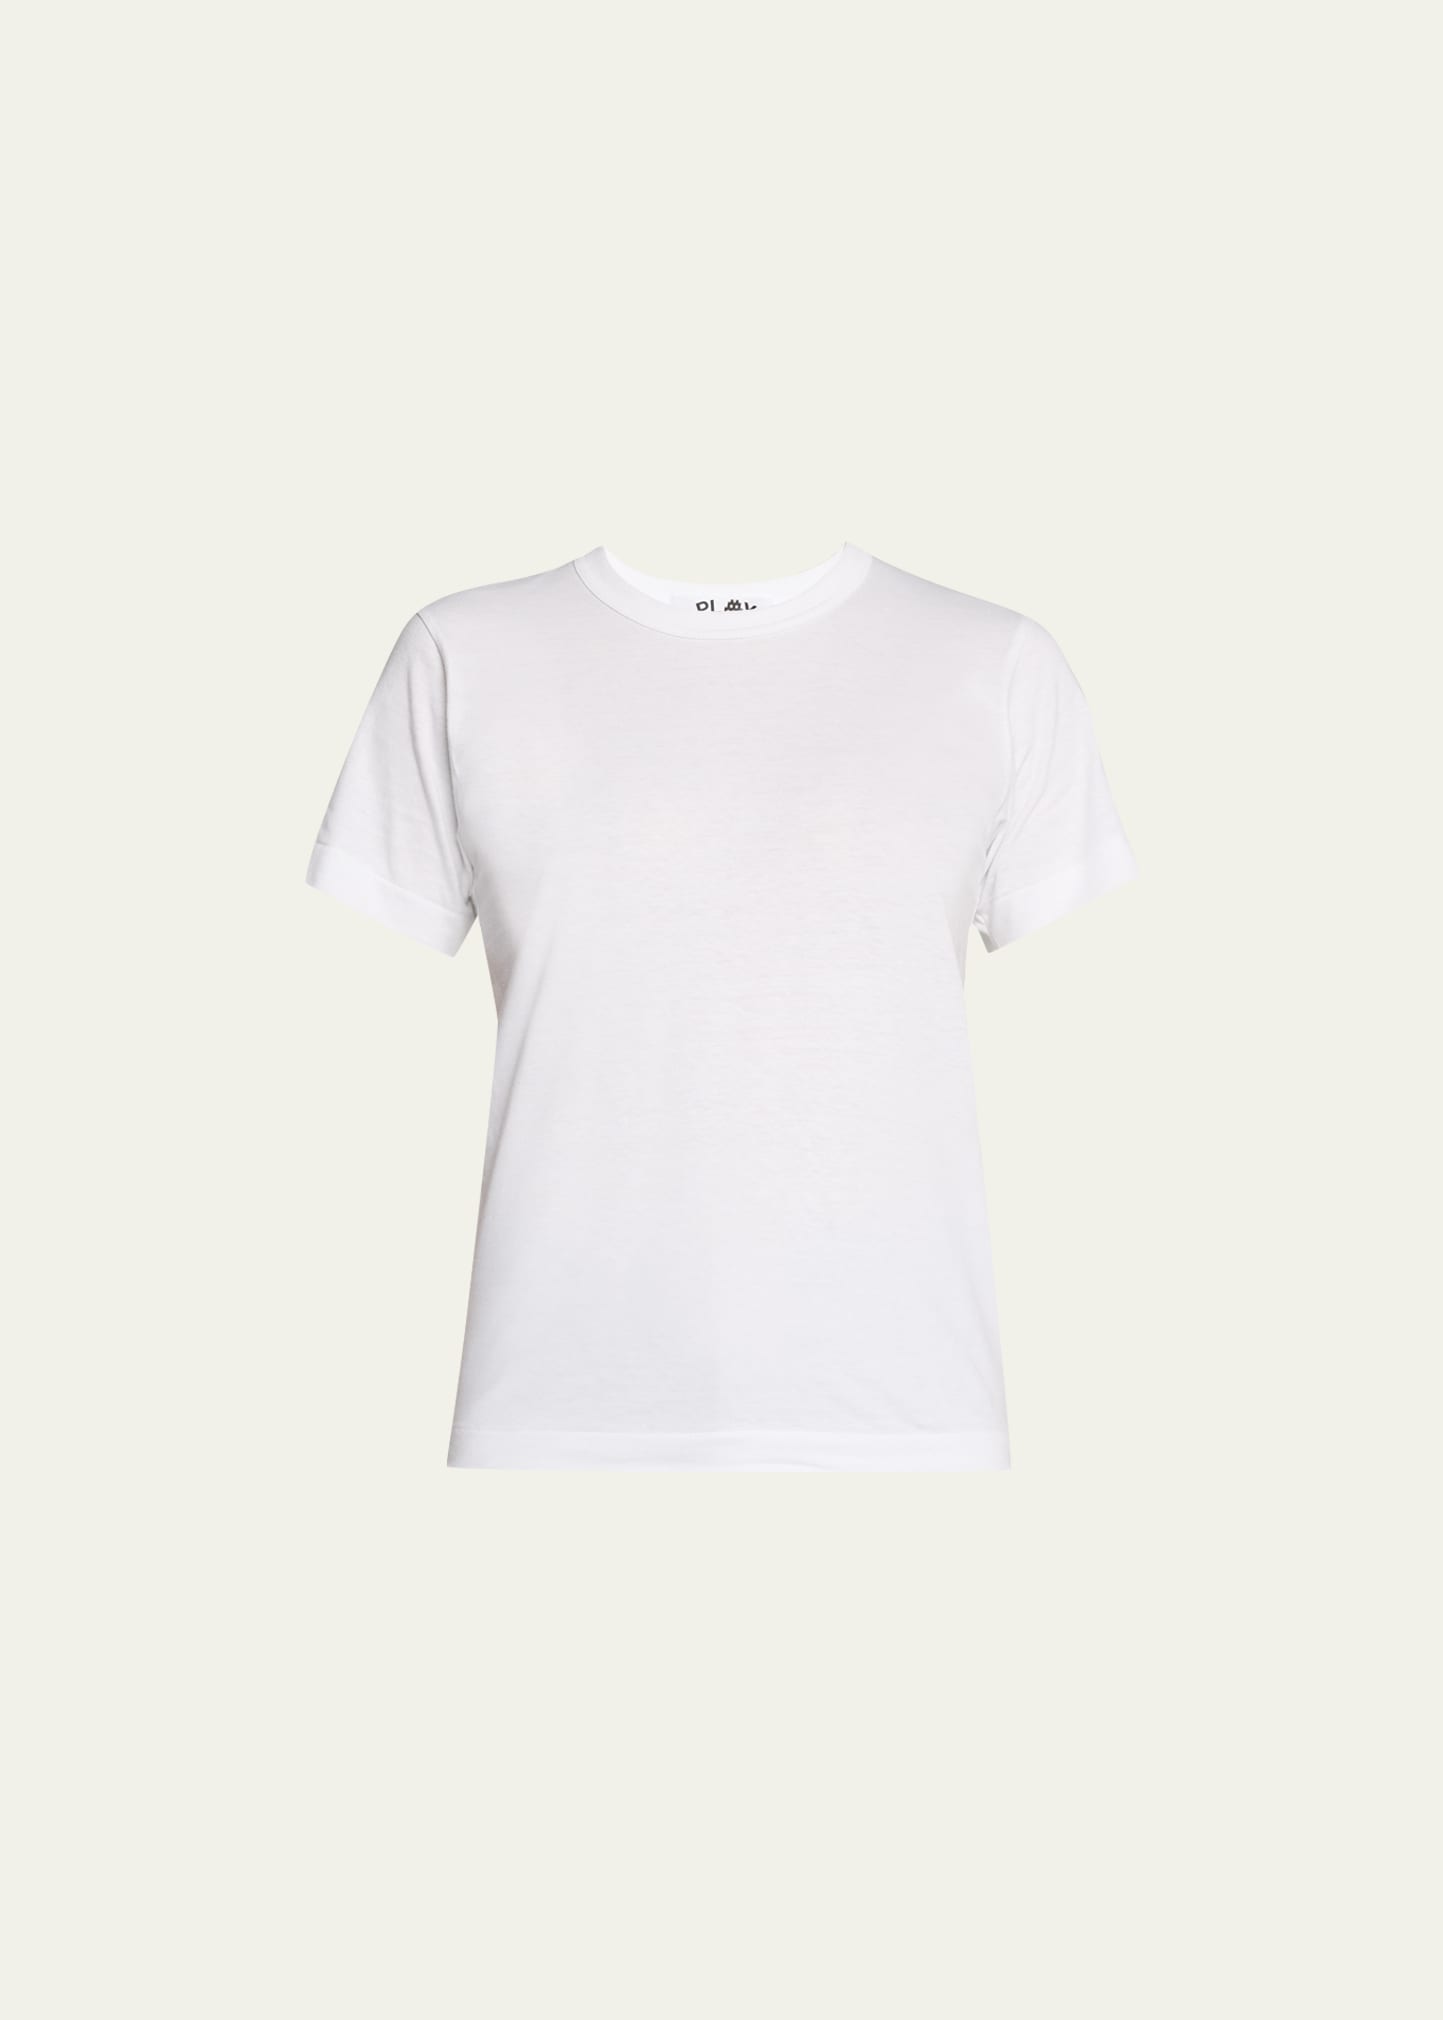 CDG Shirt x Invader Cotton Tote Bag - White